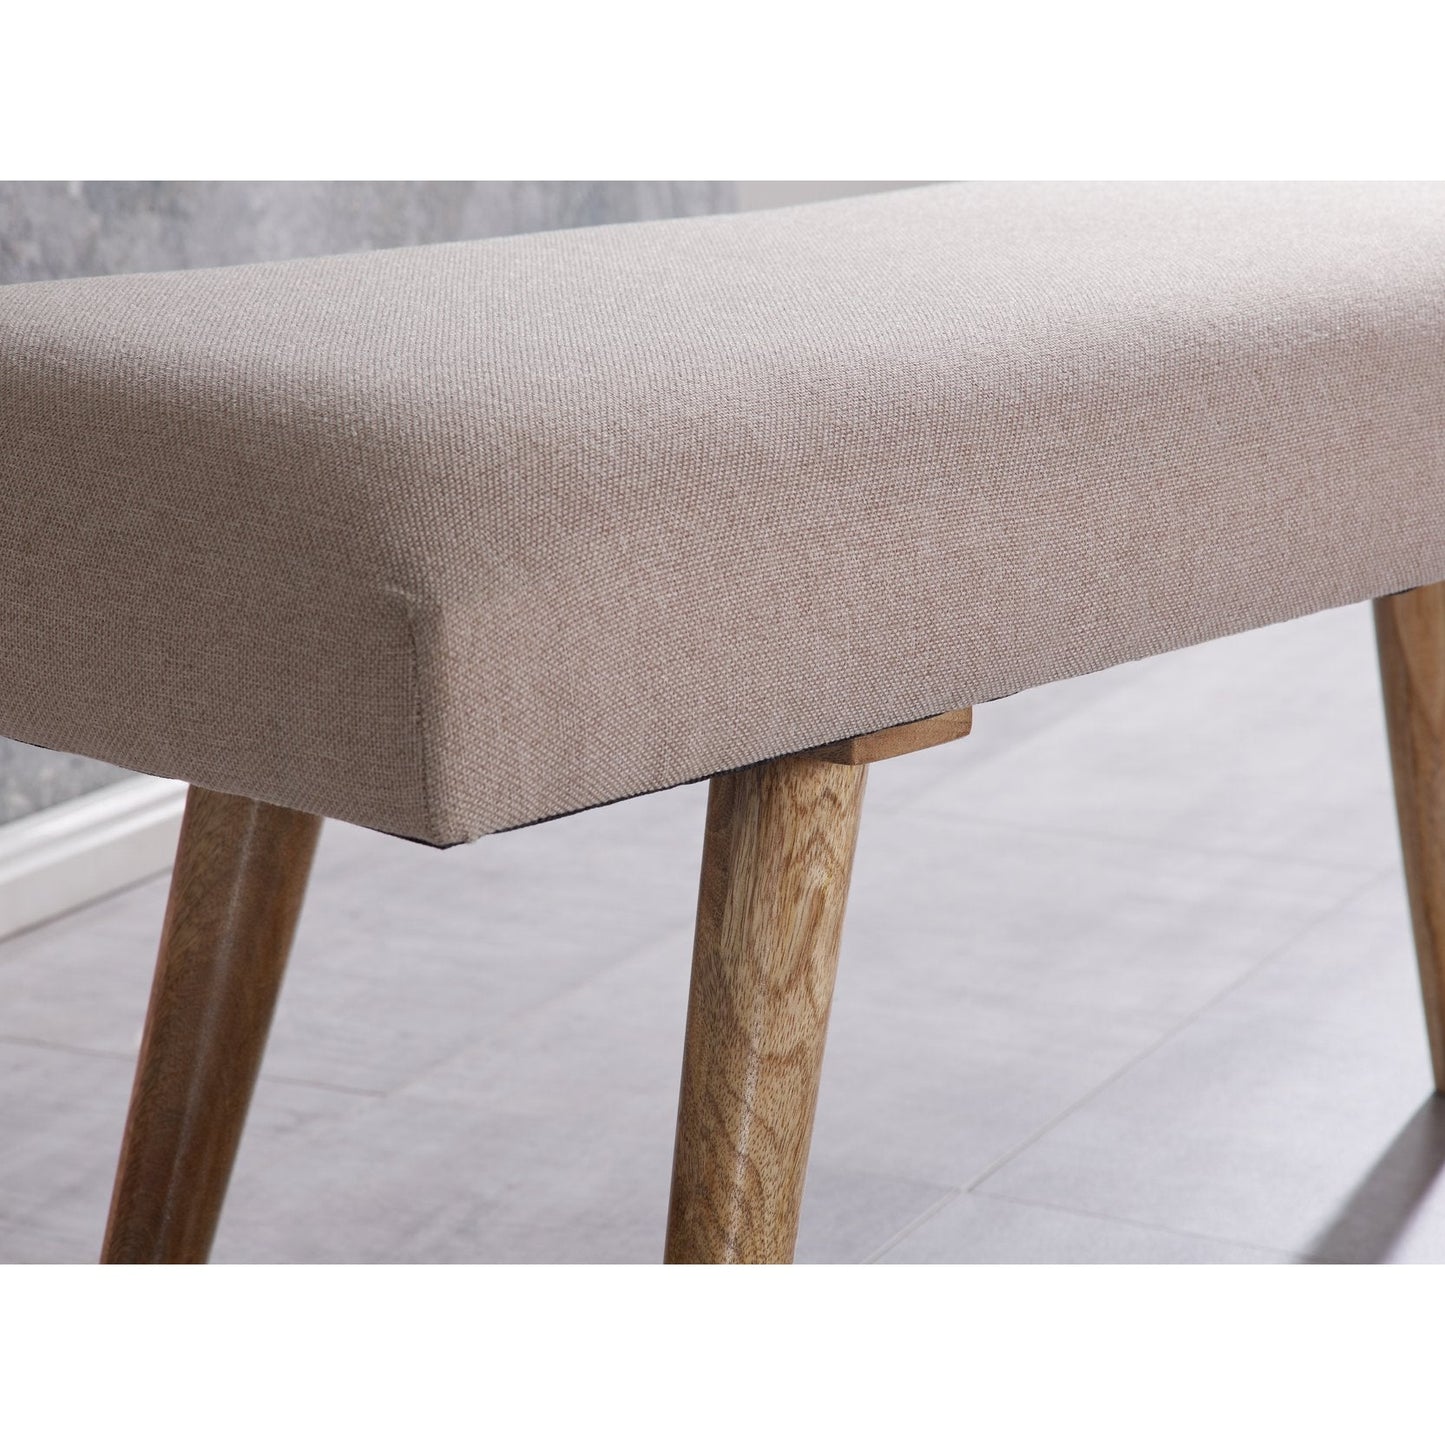 Nancy's Herkimer Sofa - Sofa - Hallway bench - Solid Mango Wood - Upholstered Sofa - Dining room bench - Beige/Gray